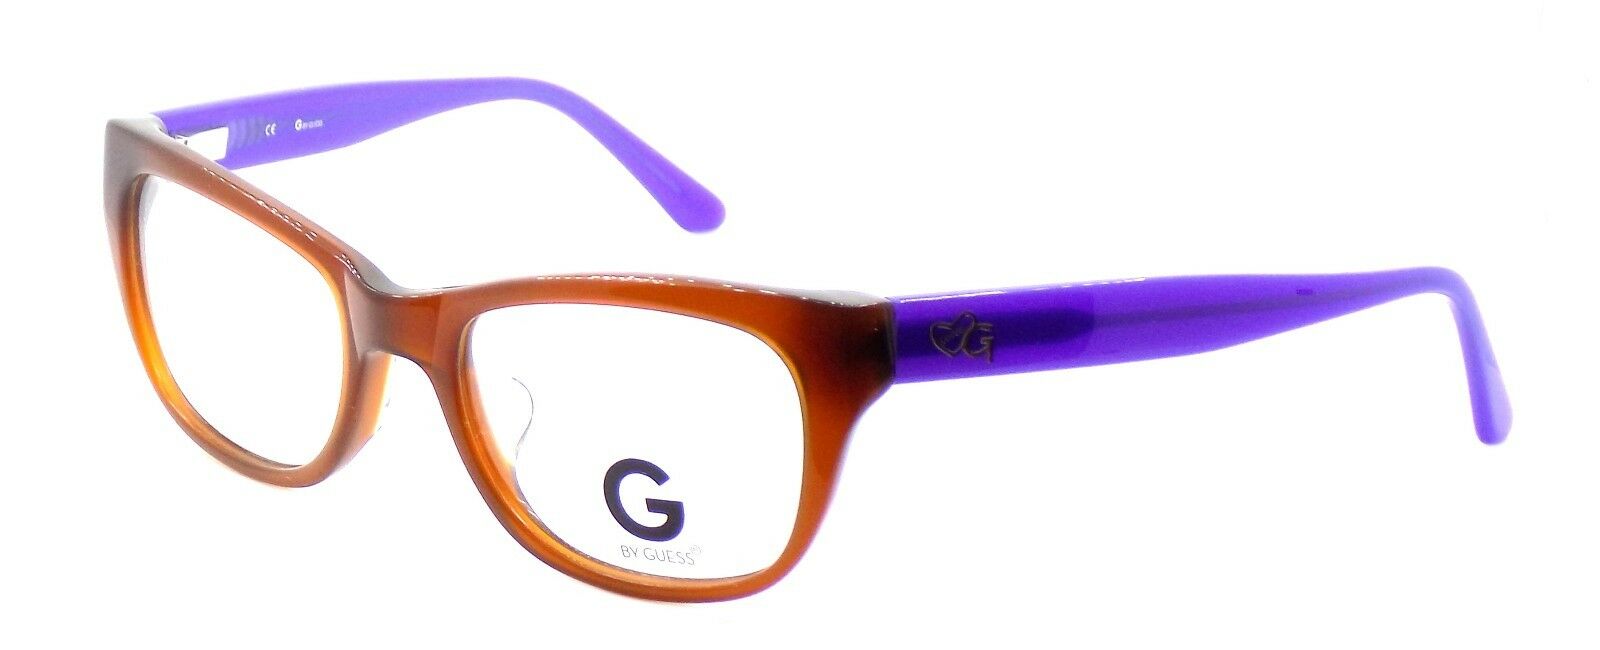 1-G by Guess GGA102 BRN Women's ASIAN FIT Eyeglasses Frames 52-19-135 Brown-715583637894-IKSpecs